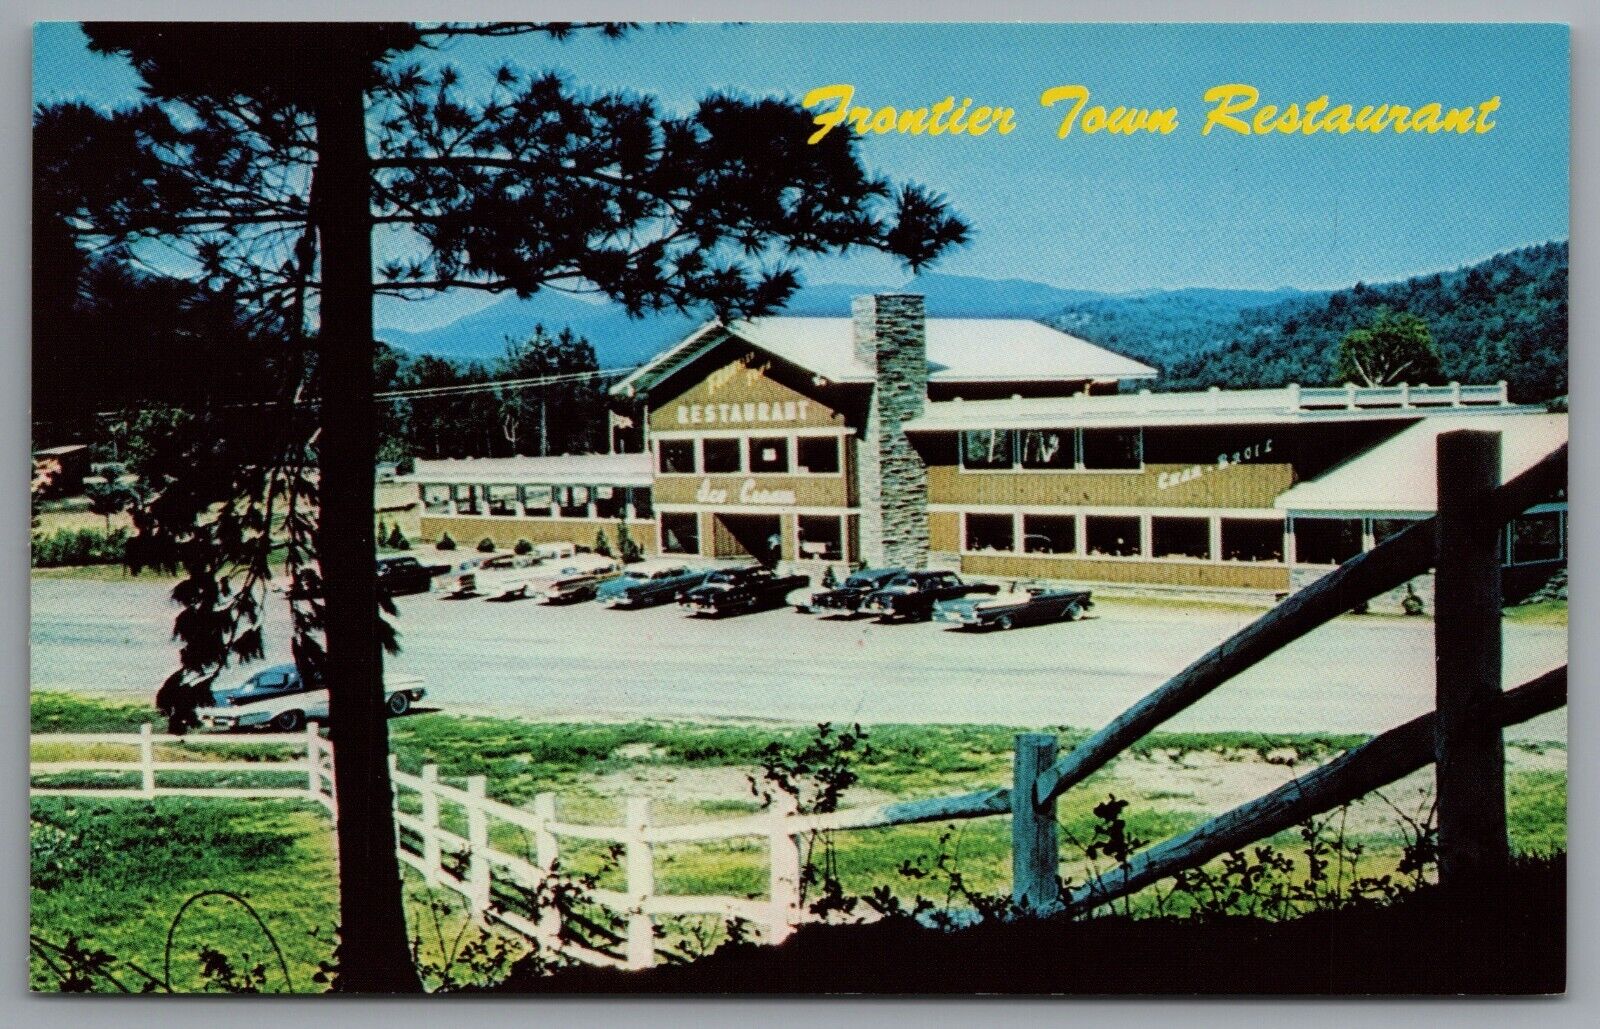 Adirondack NY Frontier Town Restaurant c1960 Postcard